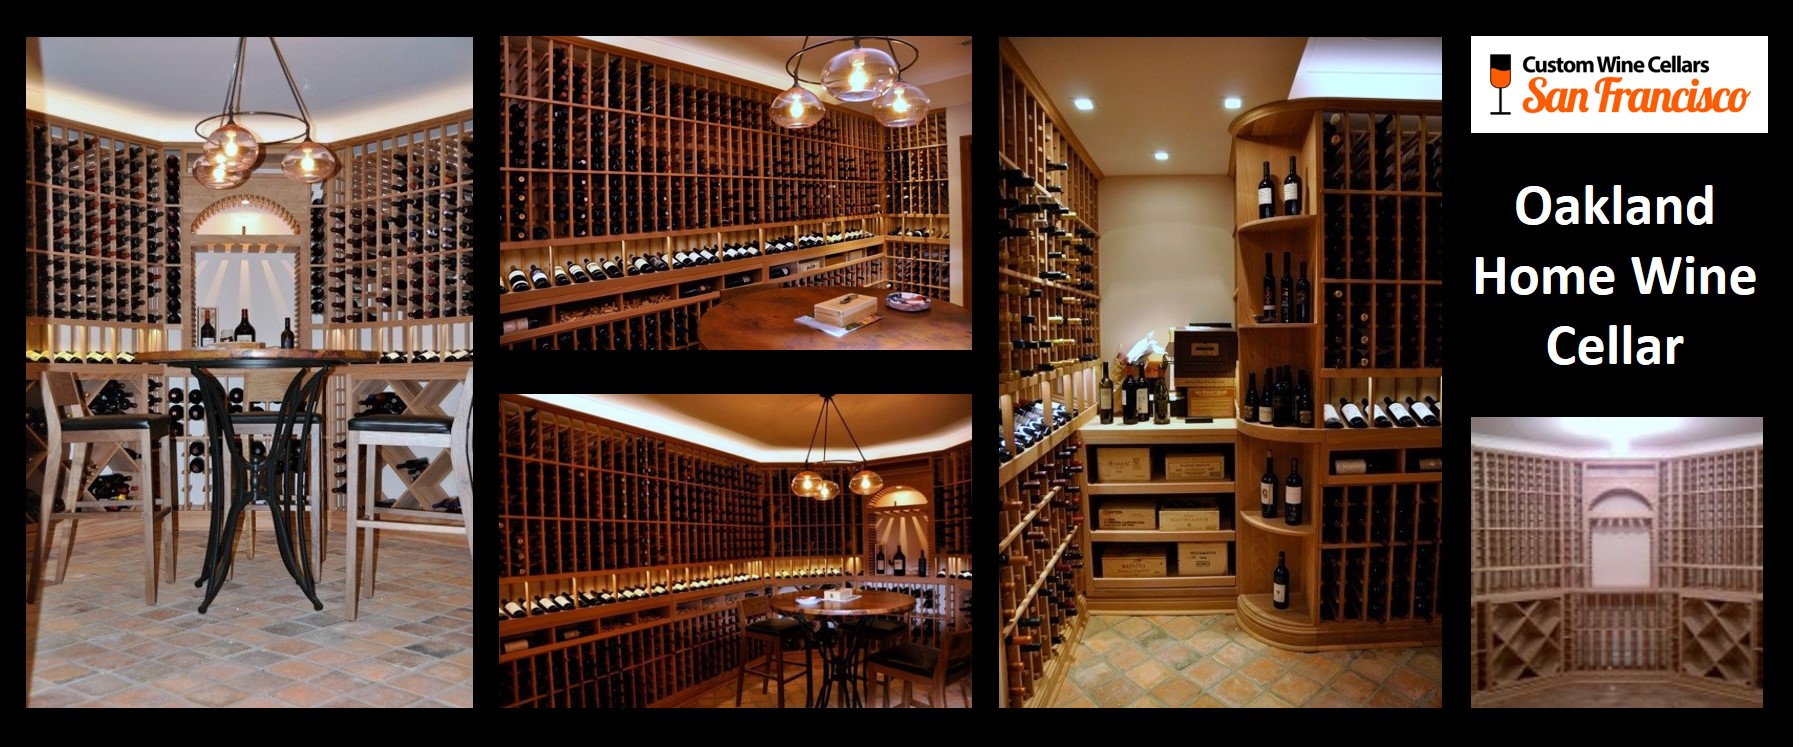 Oakland Home Wine Cellar